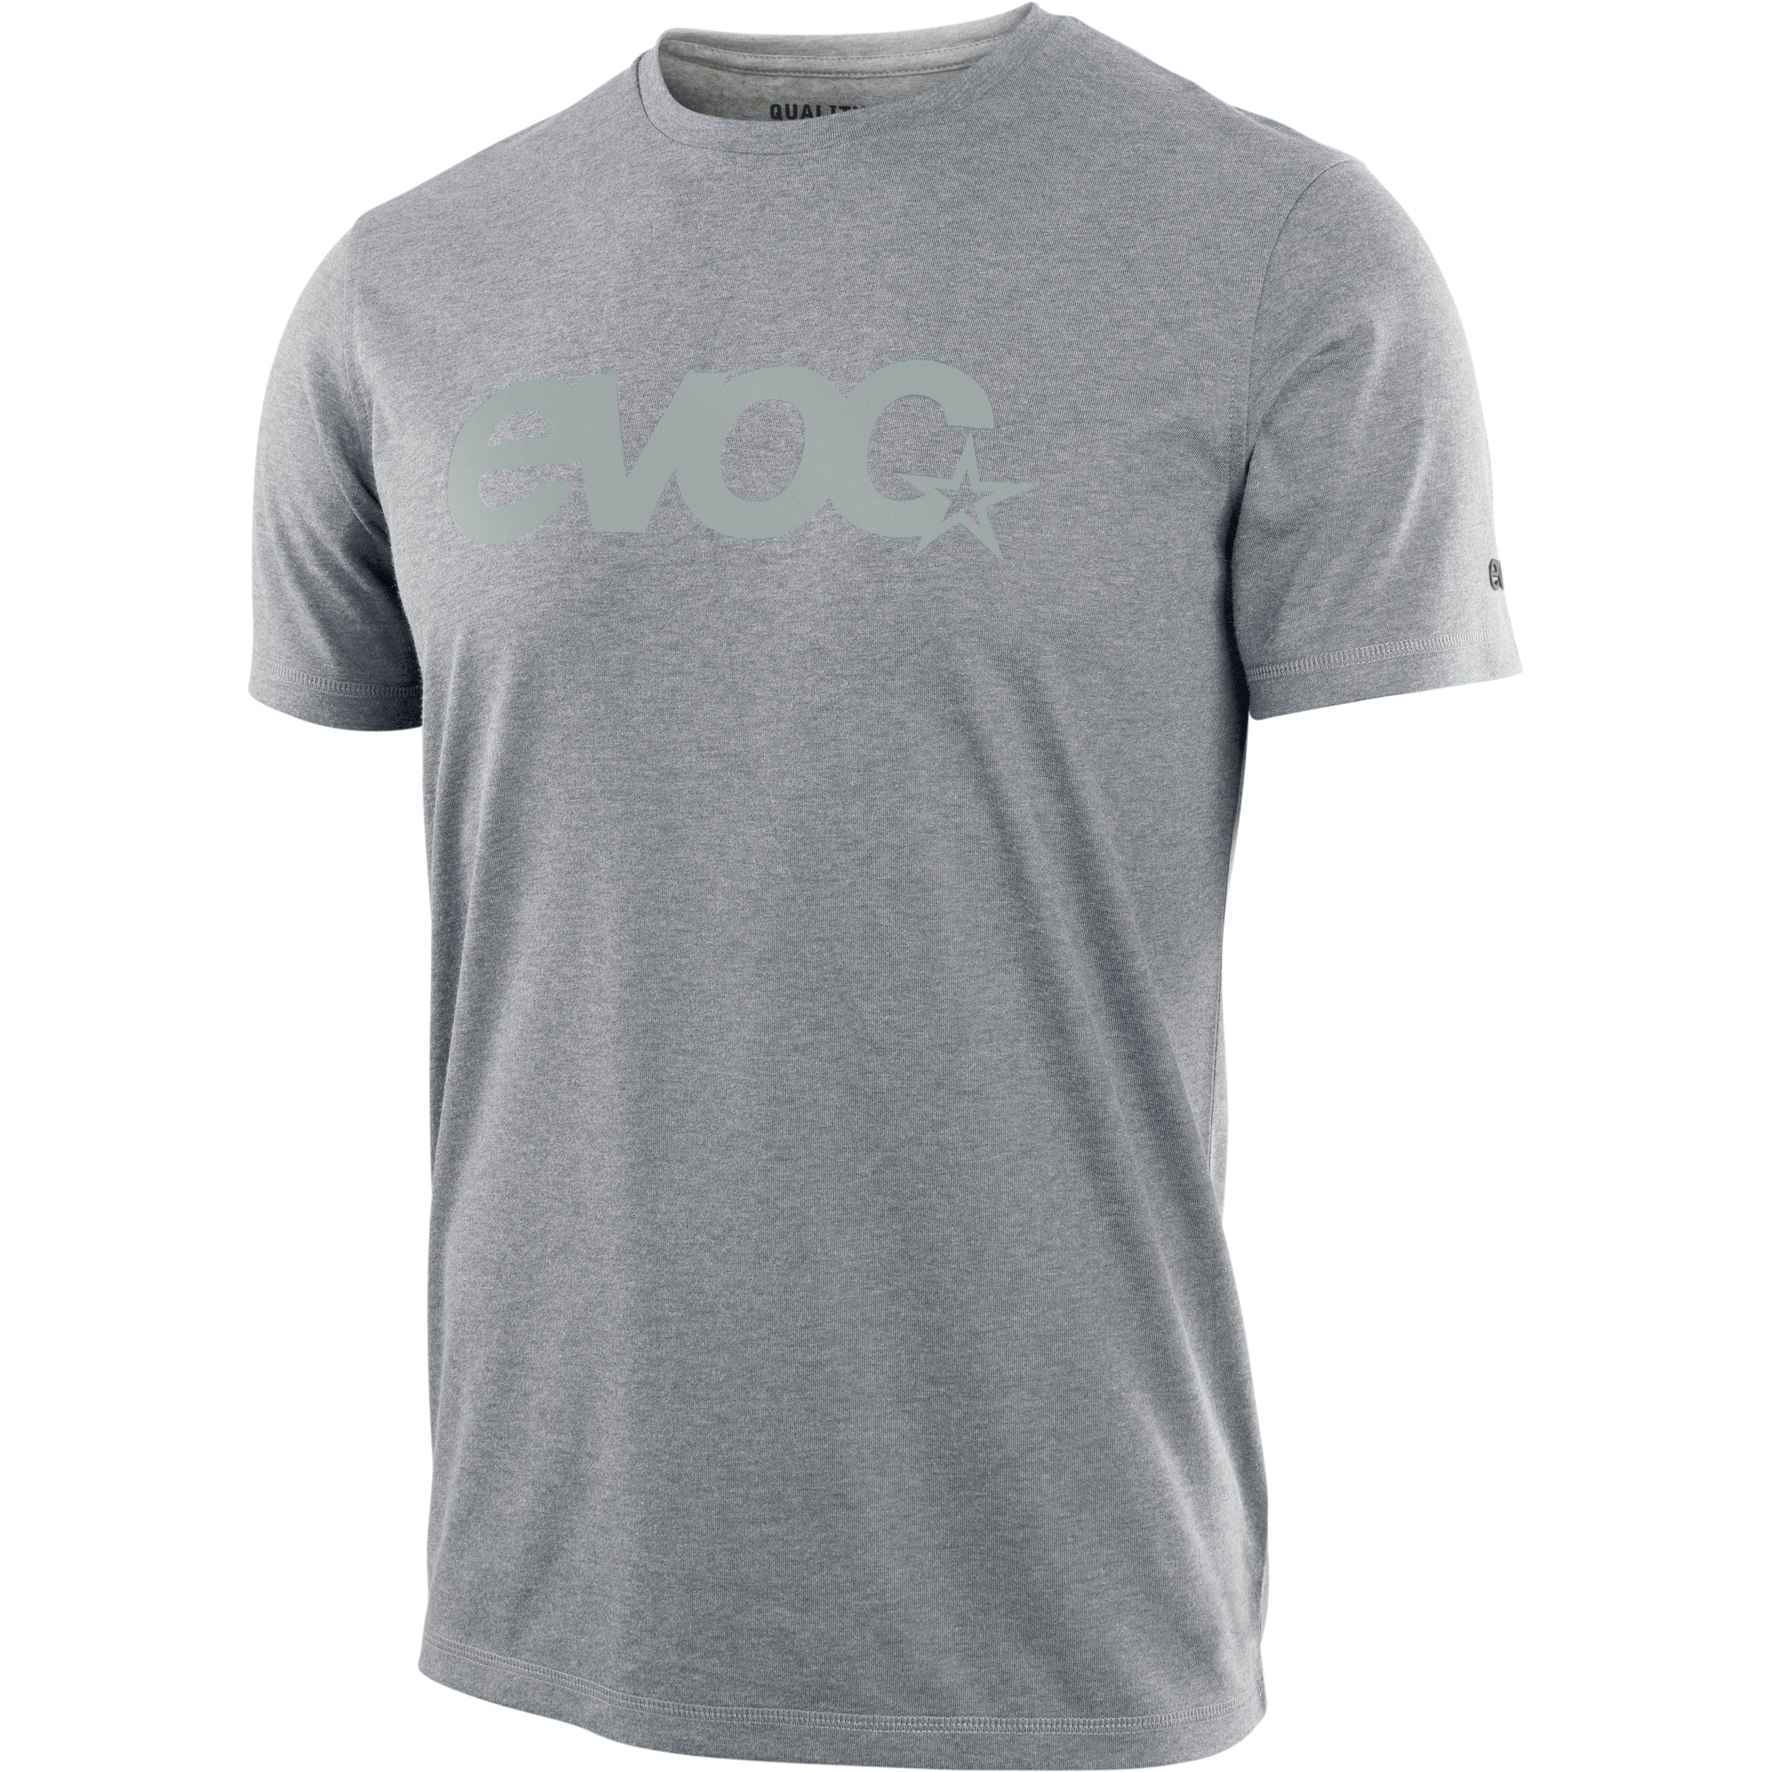 Image of EVOC Dry T-Shirt Men - Stone